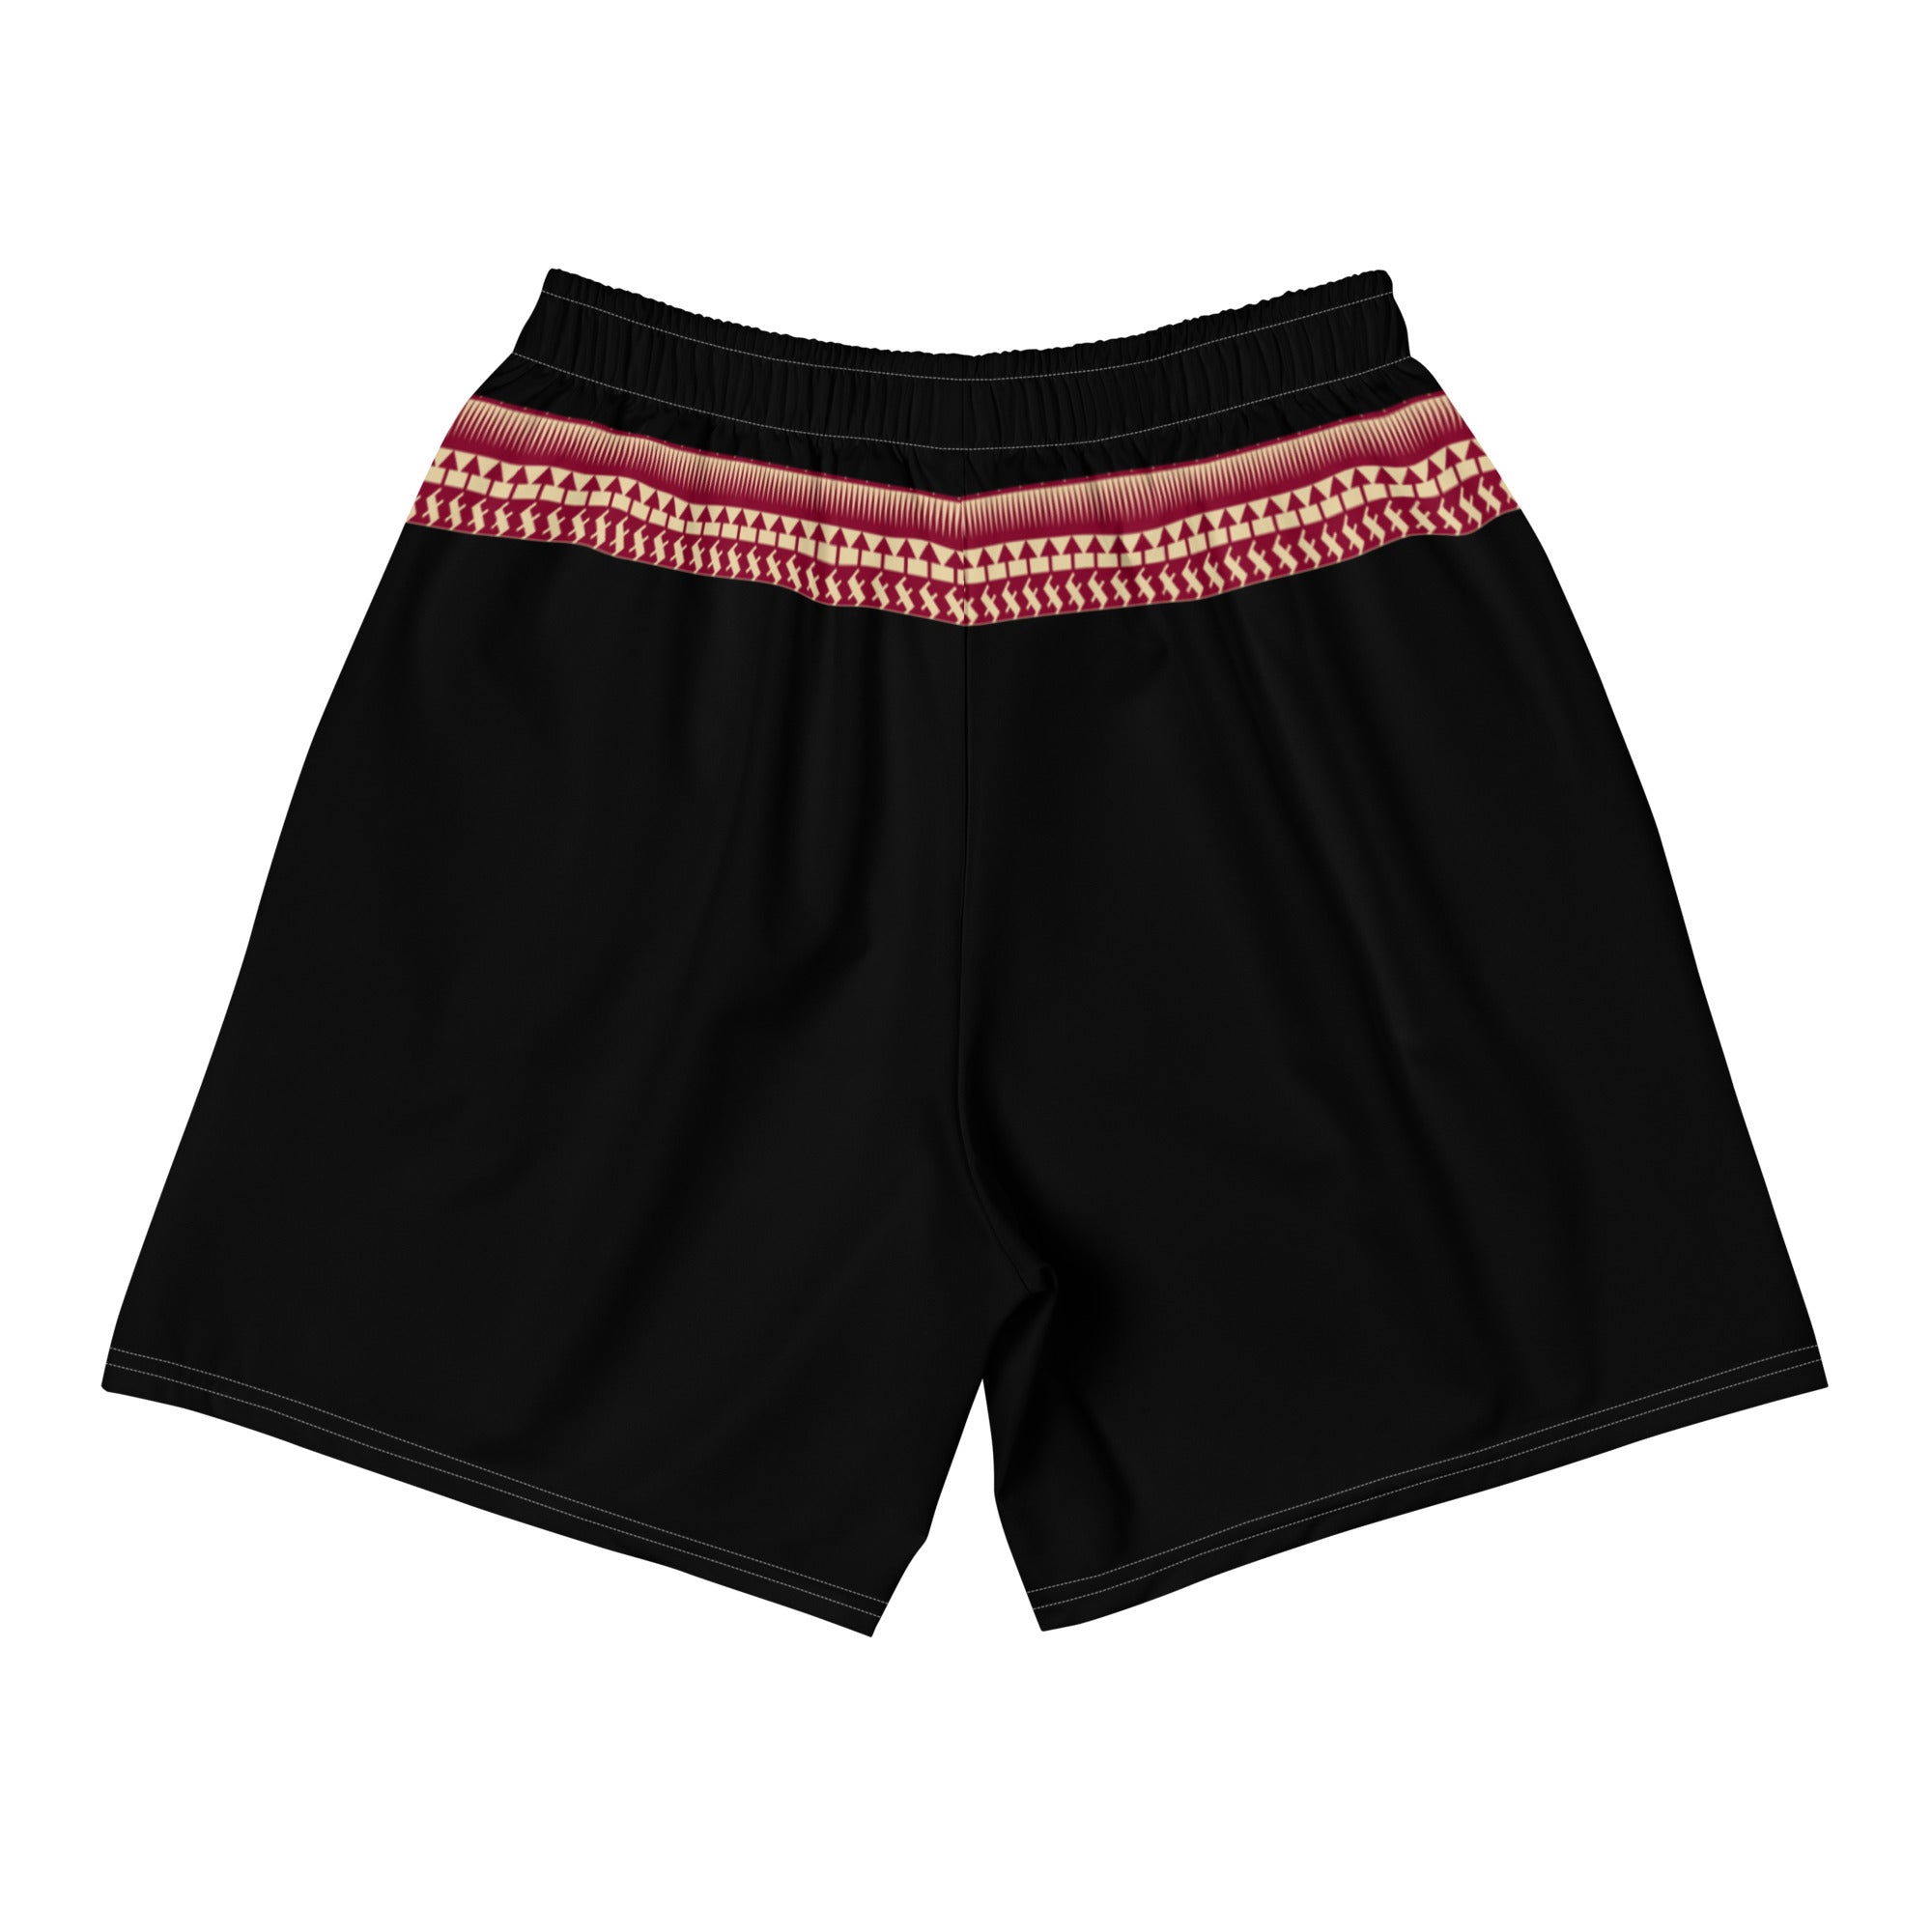 FSU Men's Athletic Shorts